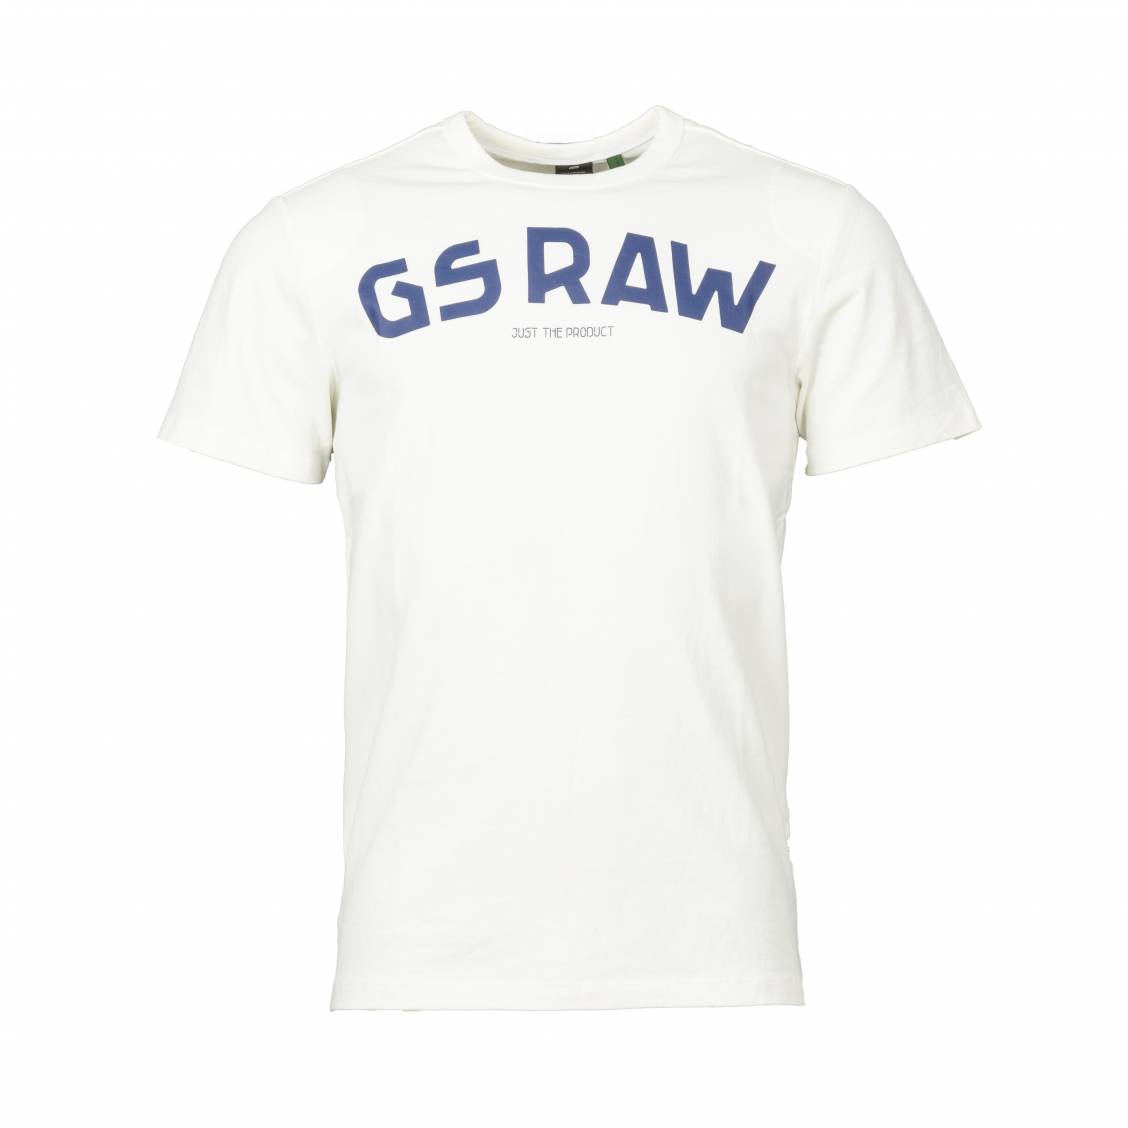 g-star tee shirts